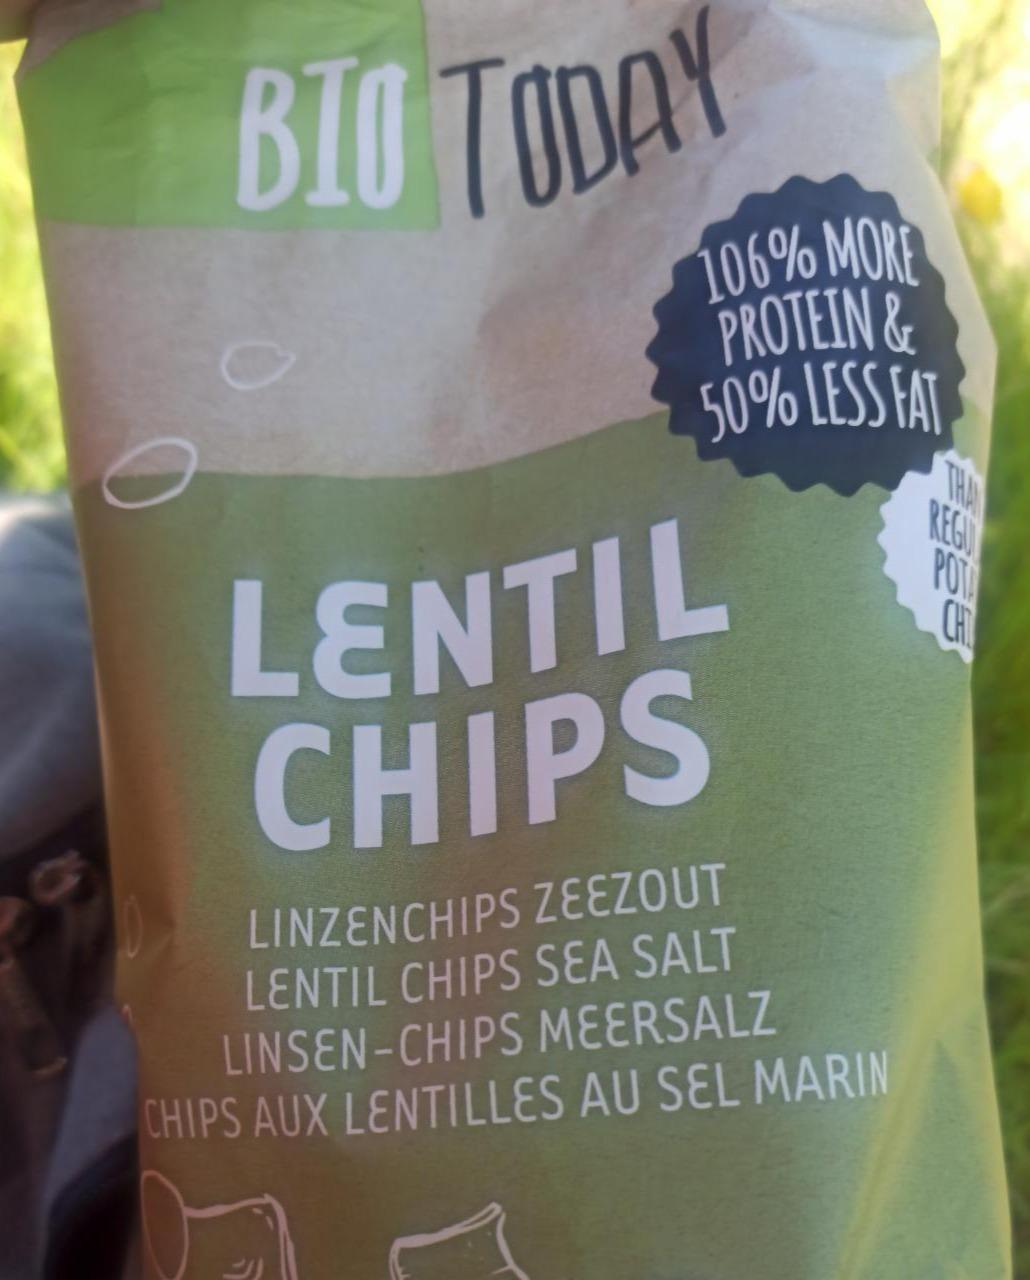 Fotografie - Lentil Chips Bio Today